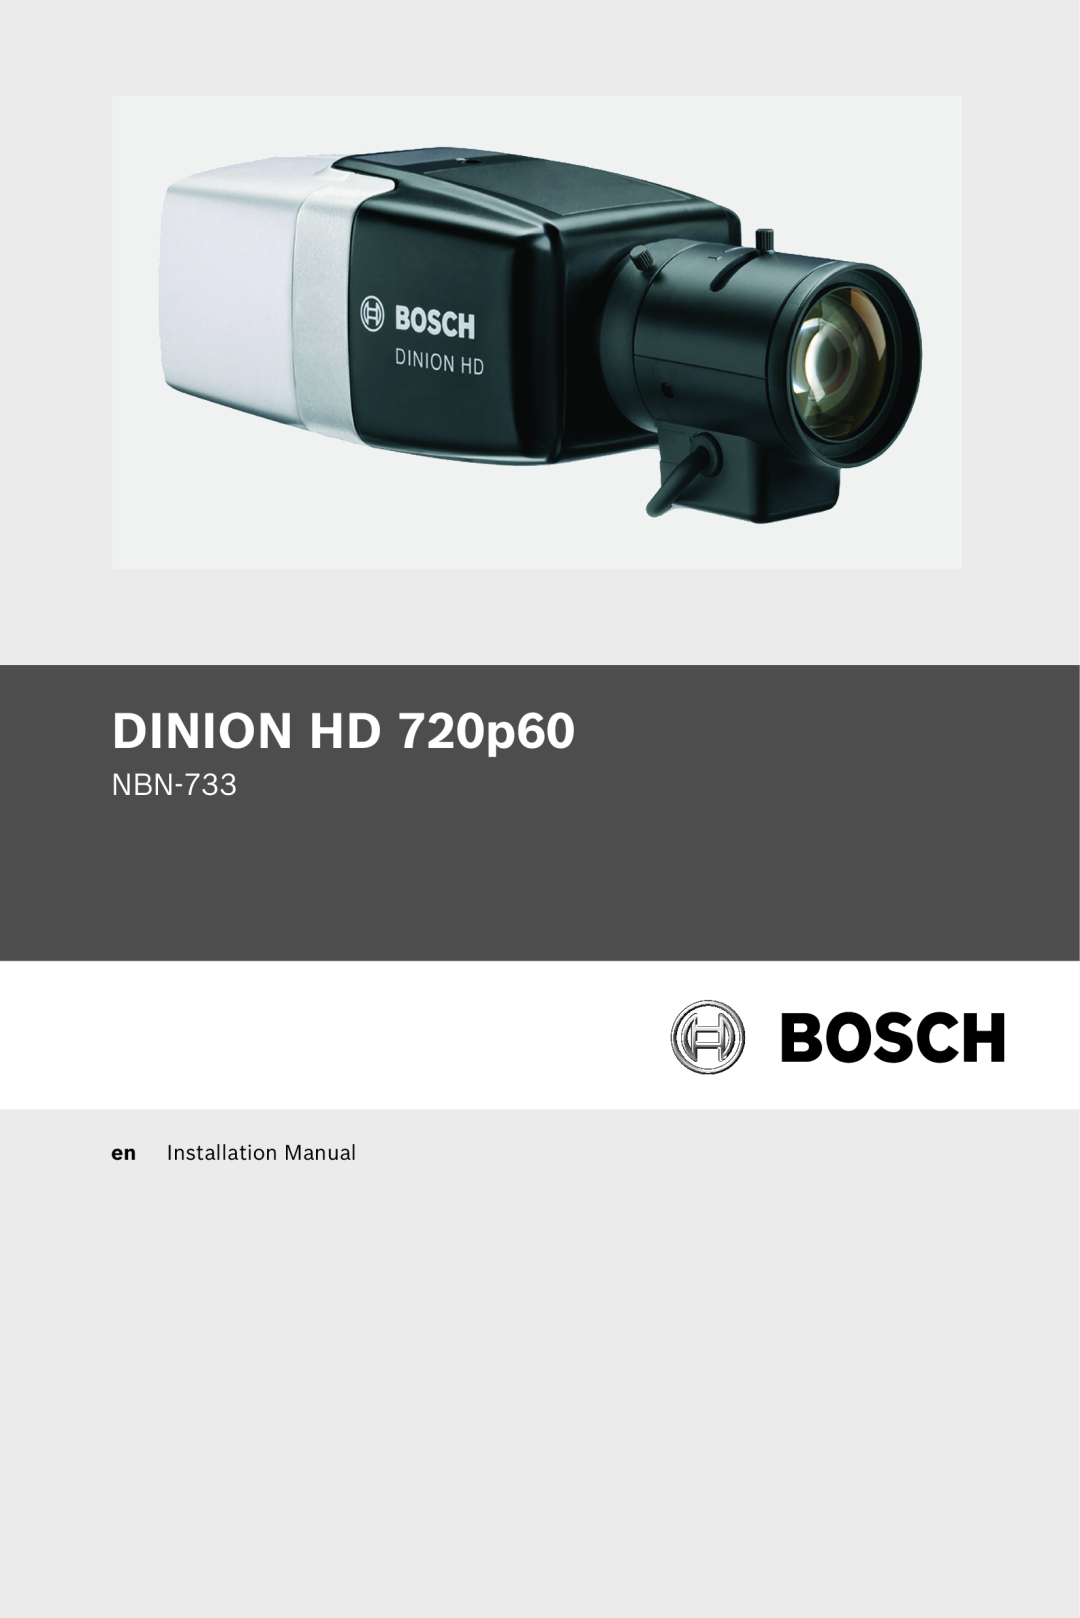 Bosch Appliances NBN-733 installation manual DINION HD 720p60, en Installation Manual 